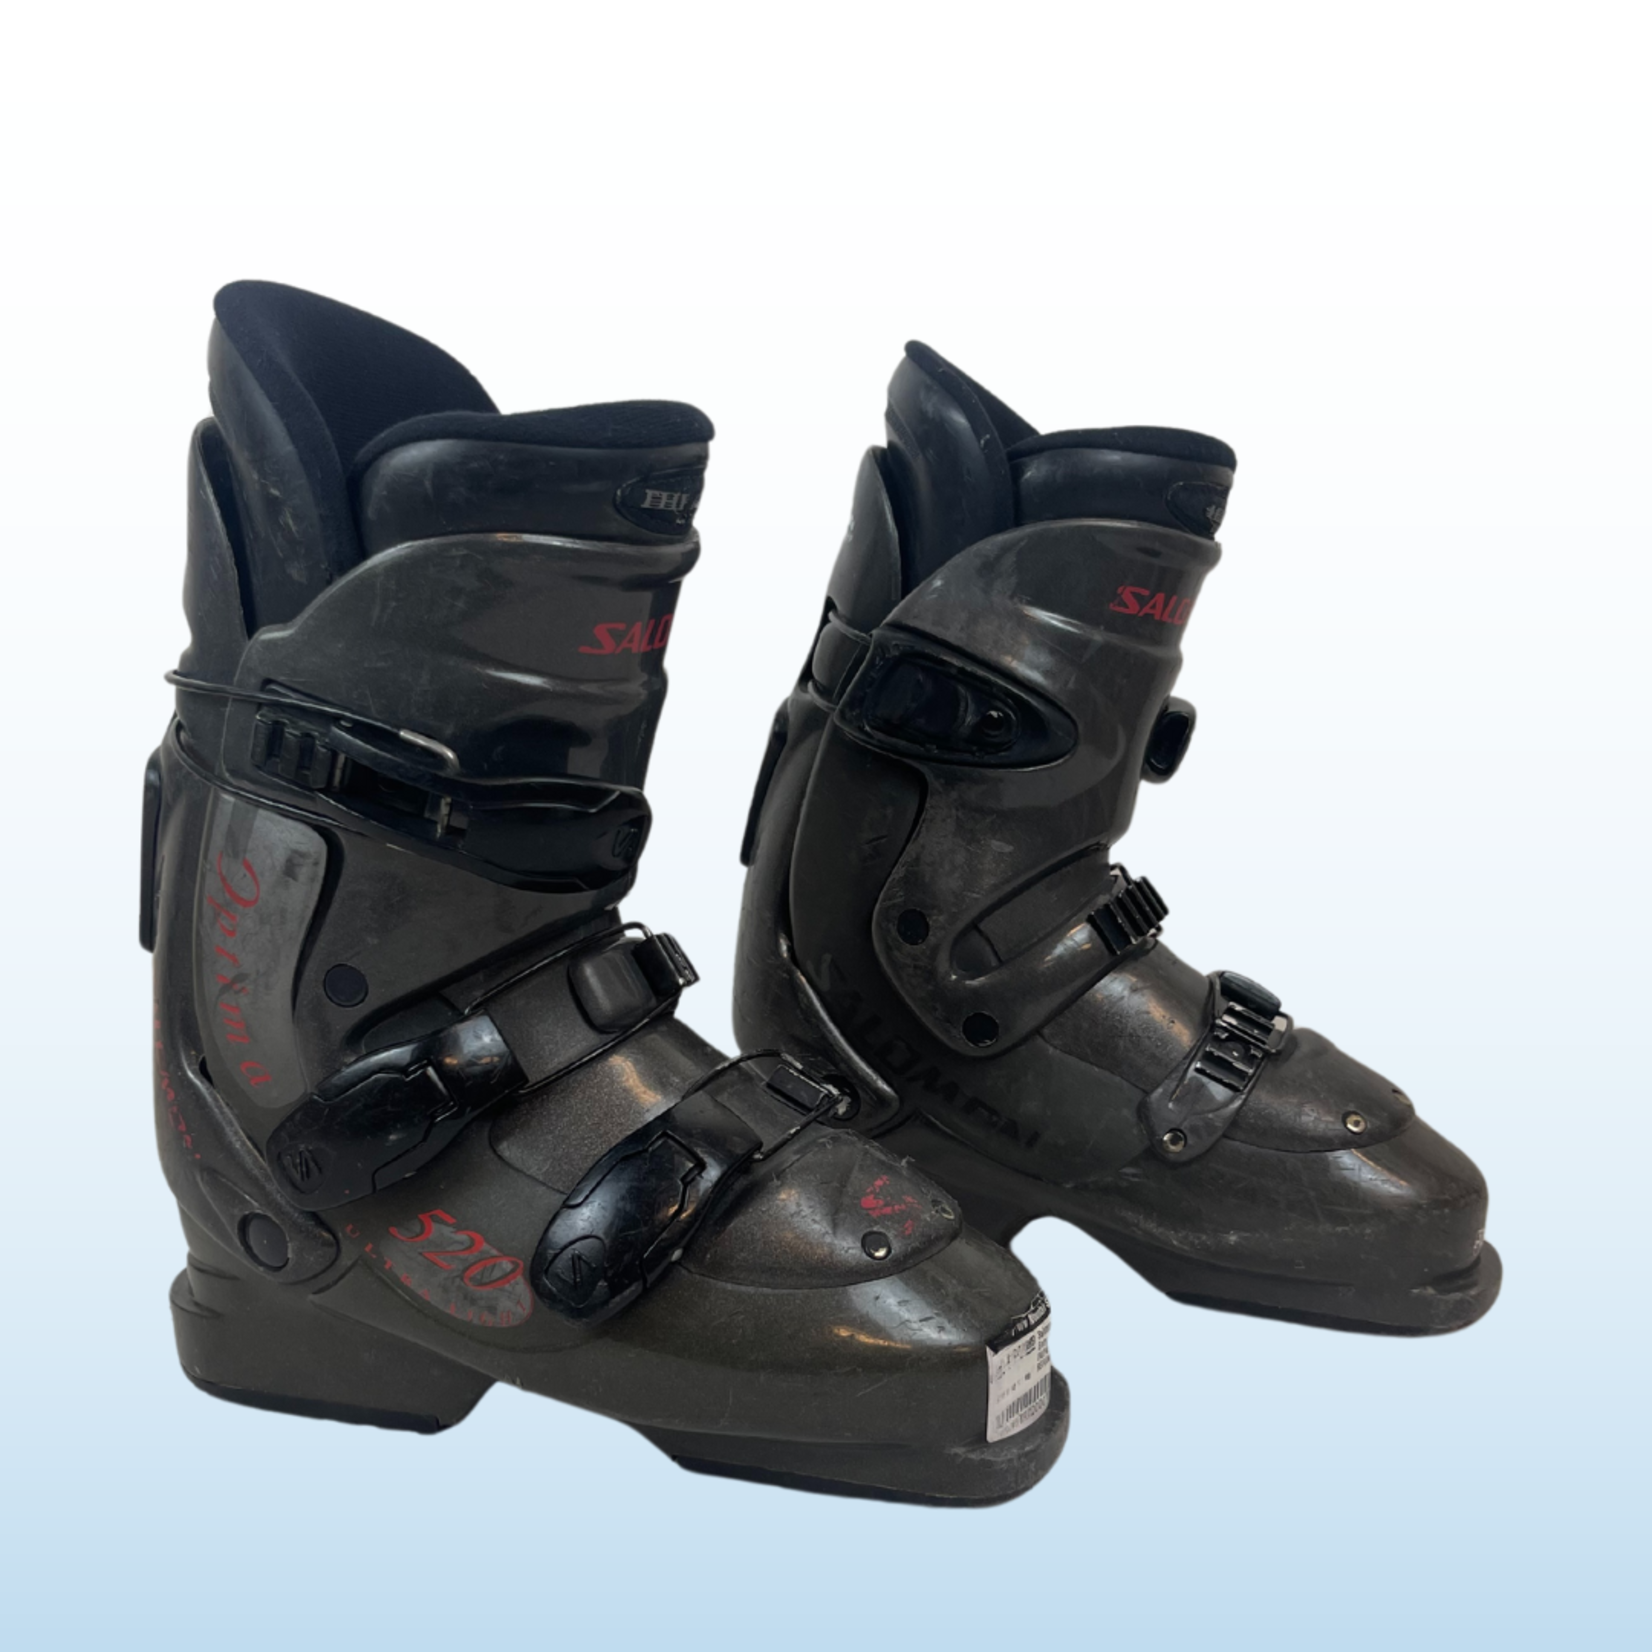 Salomon Salomon Symbio Rear Entry Ski Boots, Size 30  SOLD AS IS/NO REFUNDS/EXCHANGES